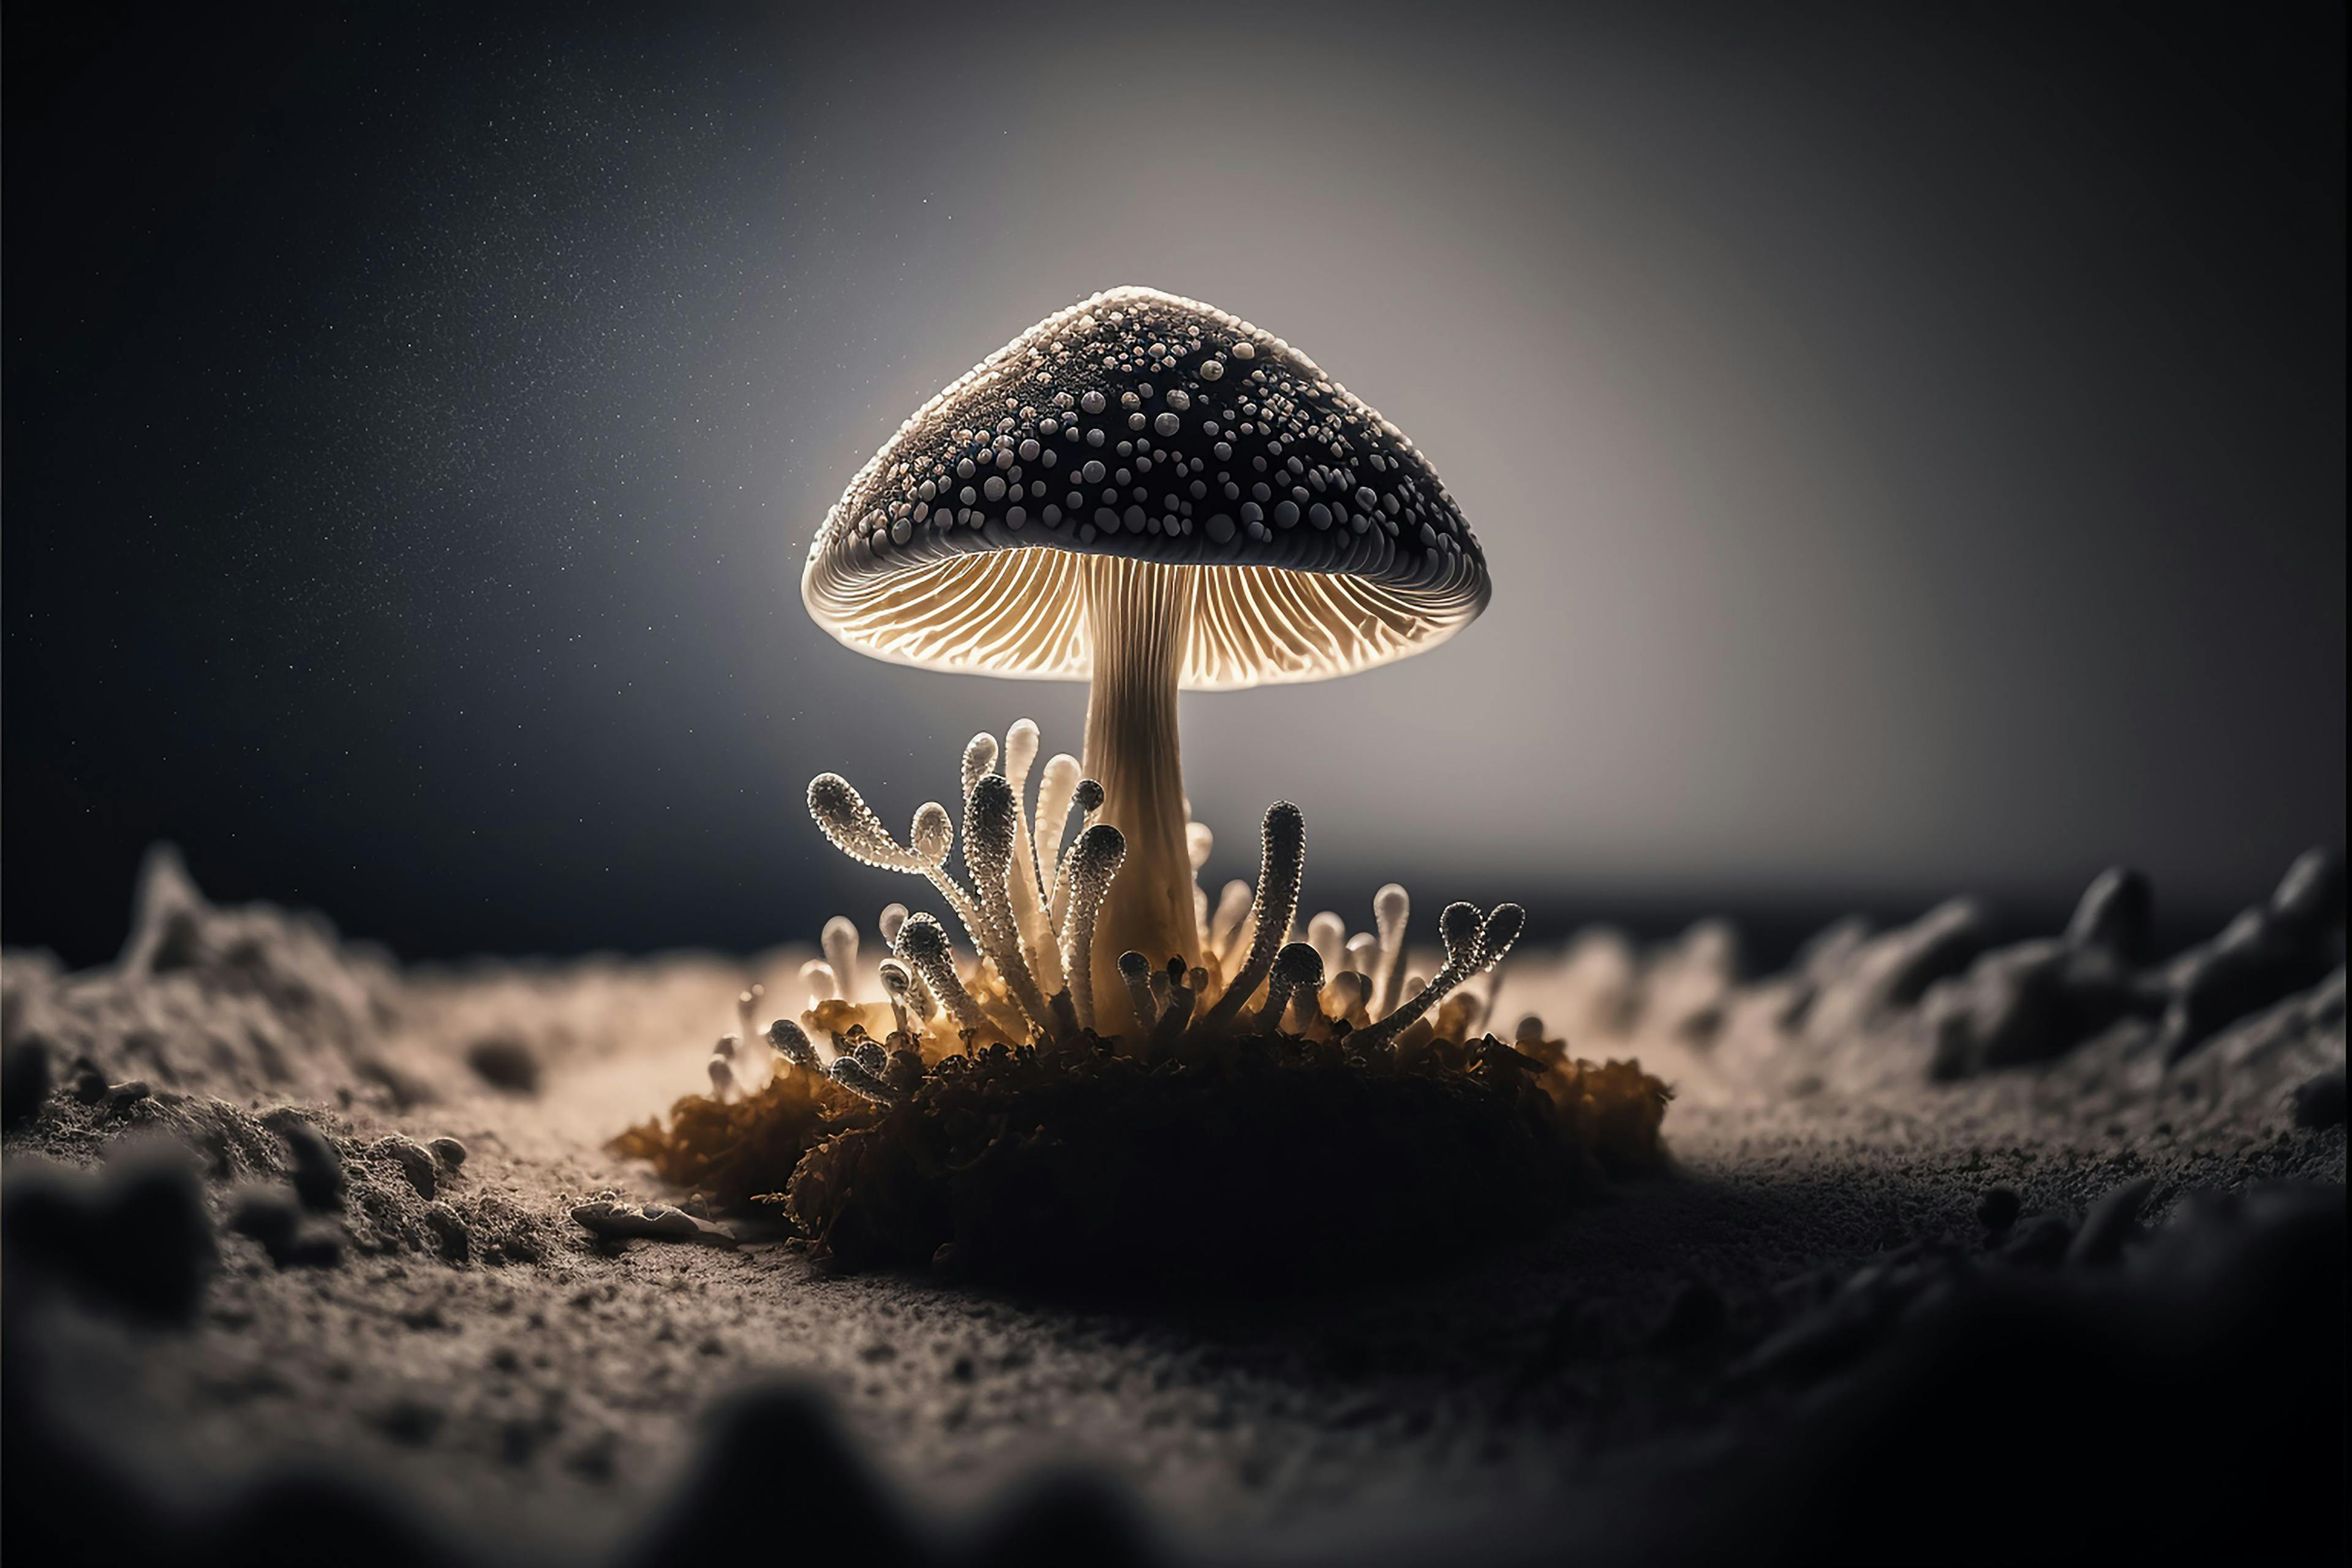 close up of a psilocybin mushroom on a piece of dirt, magic mushroom | Image Credit: © Nastazia - stock.adobe.com 